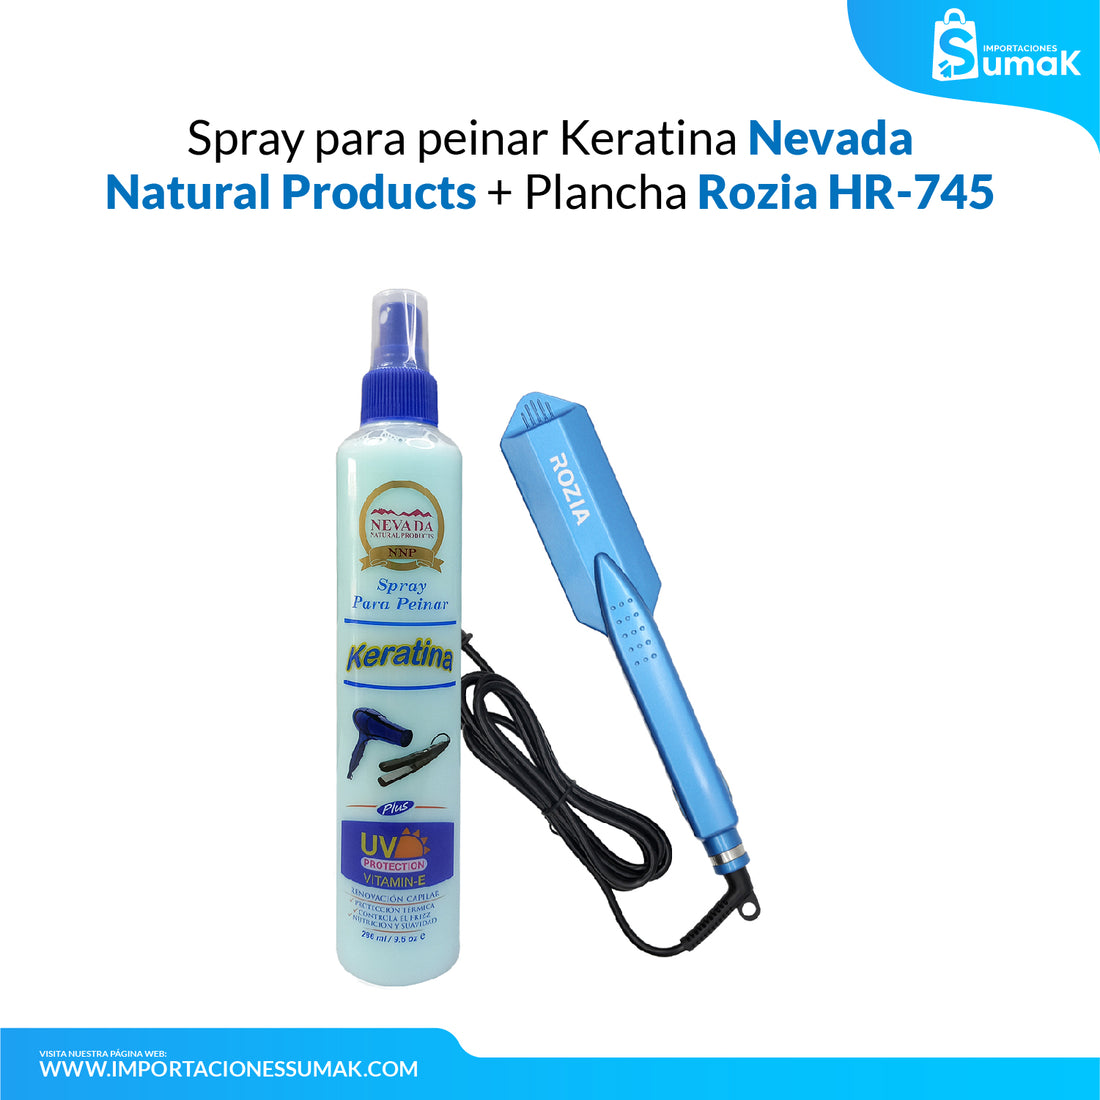 Spray para Peinar Keratina + Plancha Rozia HR-745